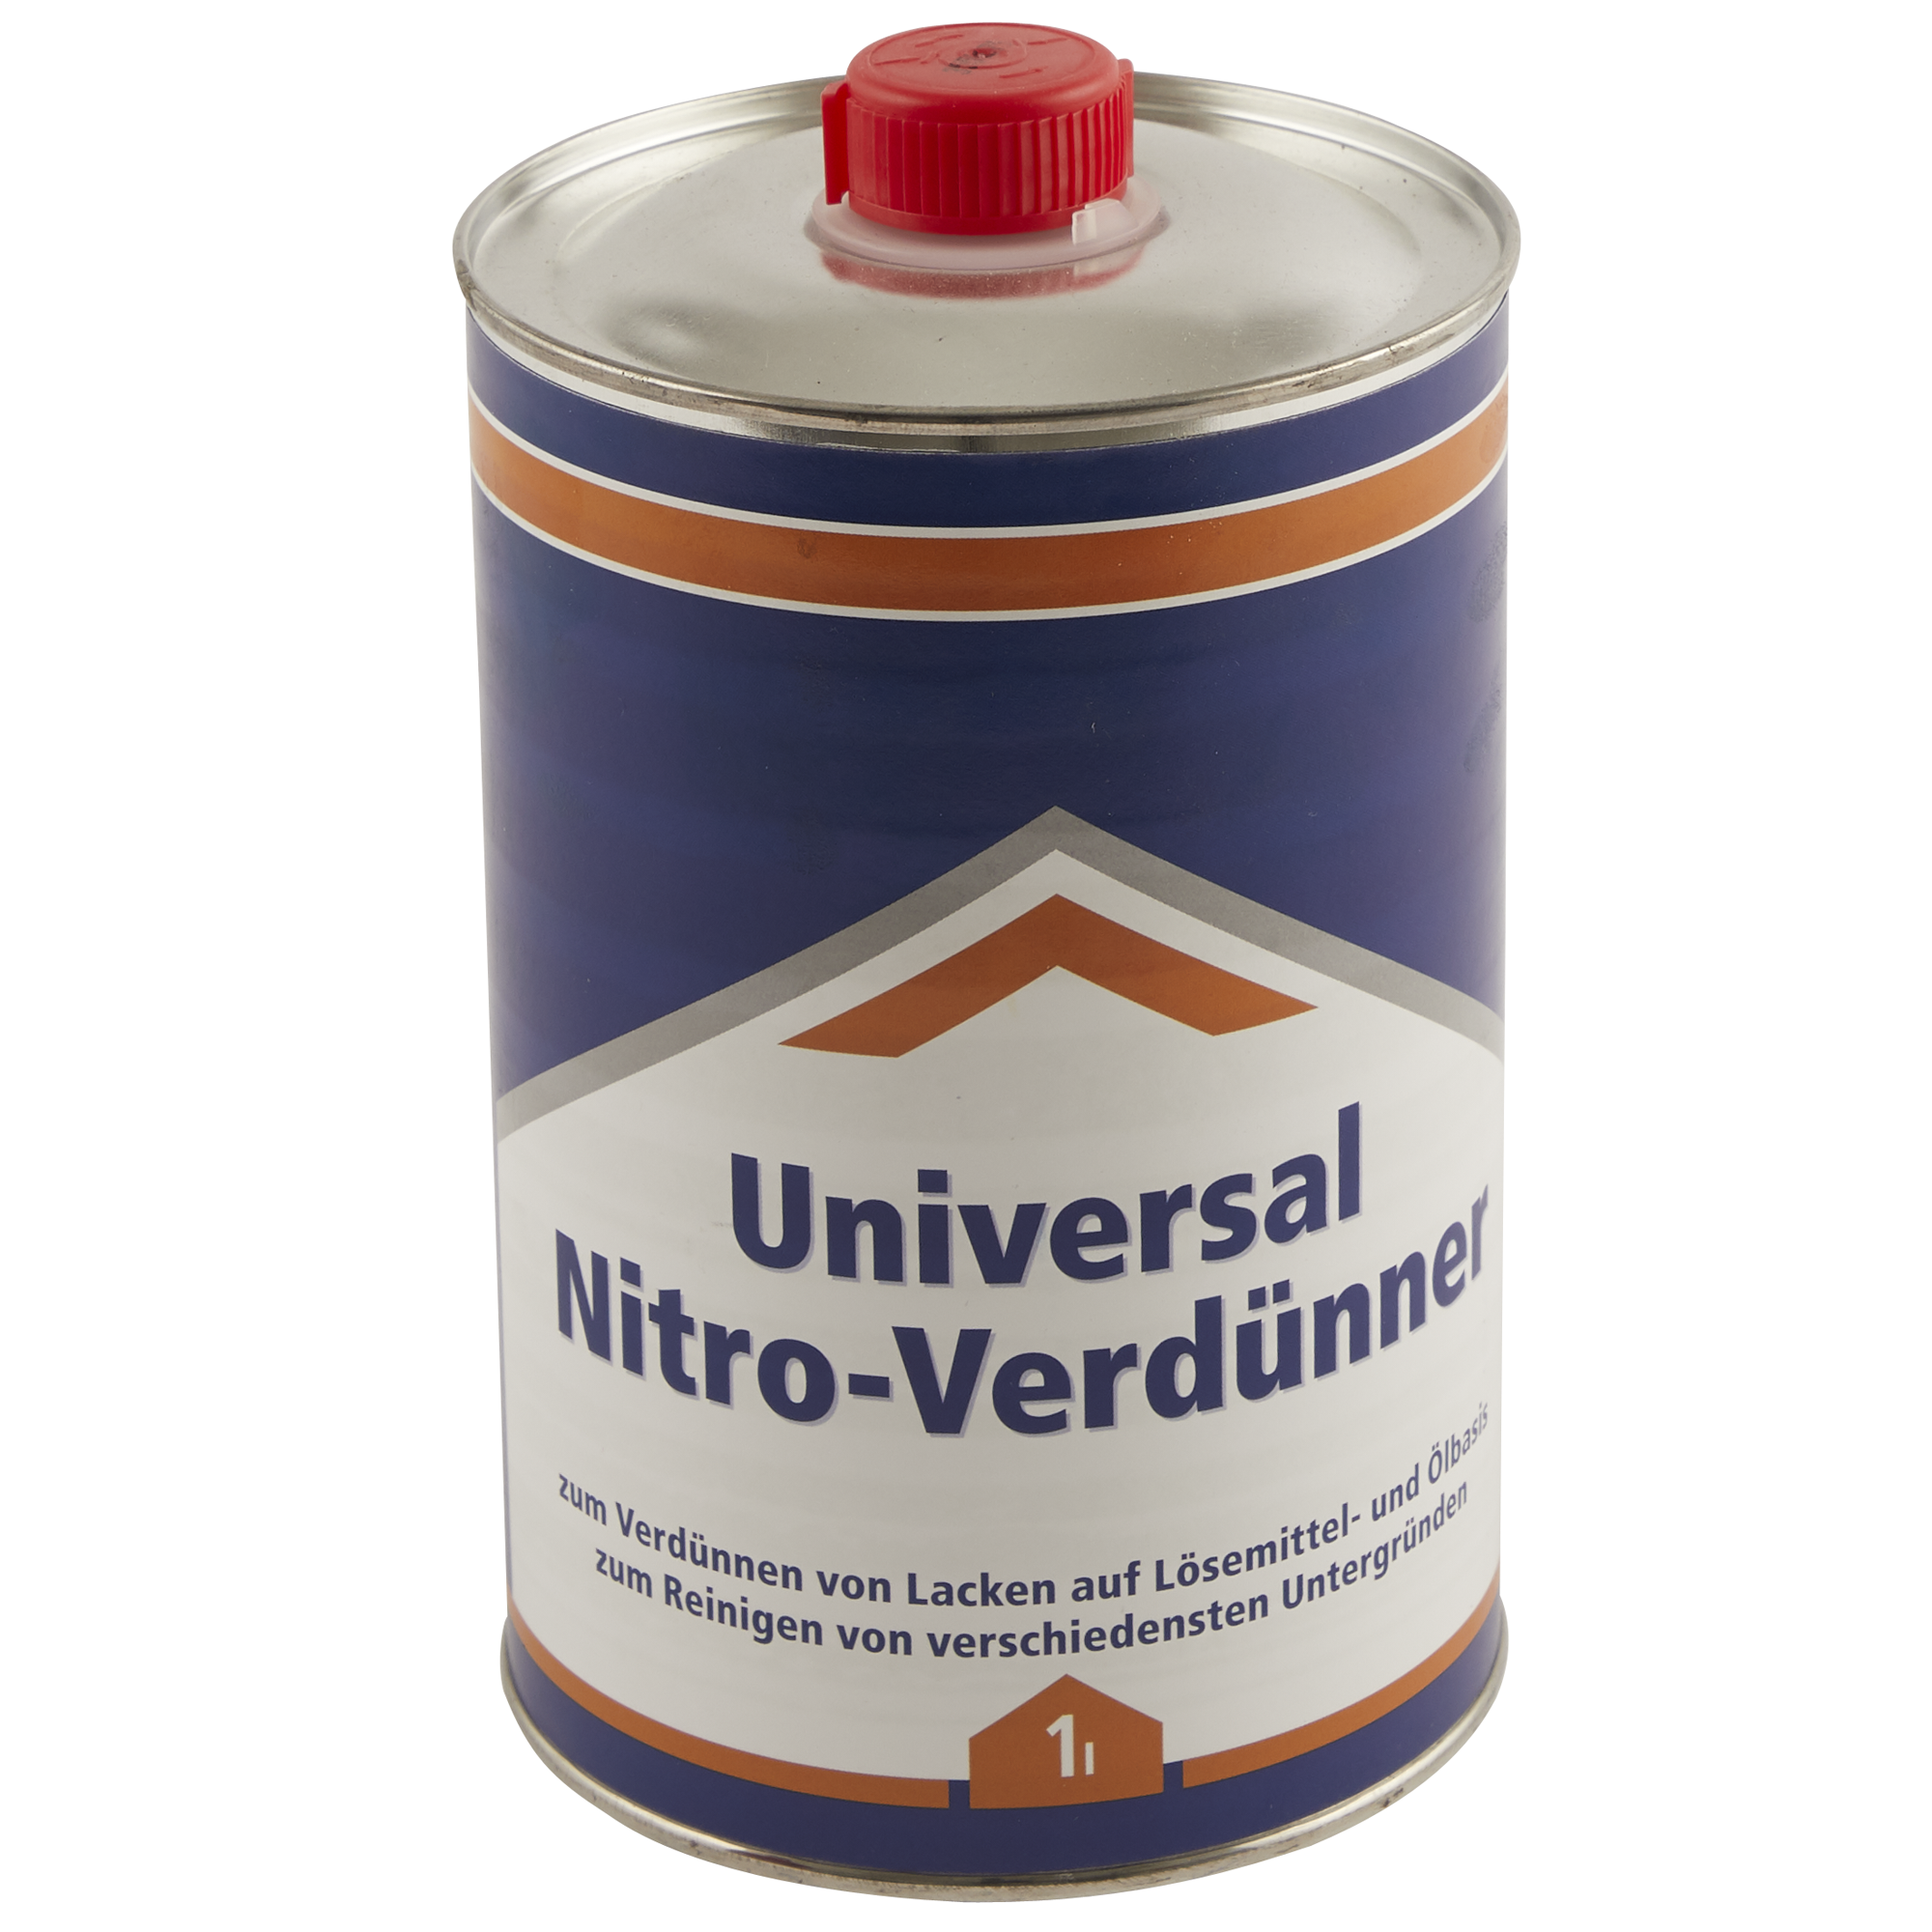 Universal Nitro-Verdünner 1 l + product picture